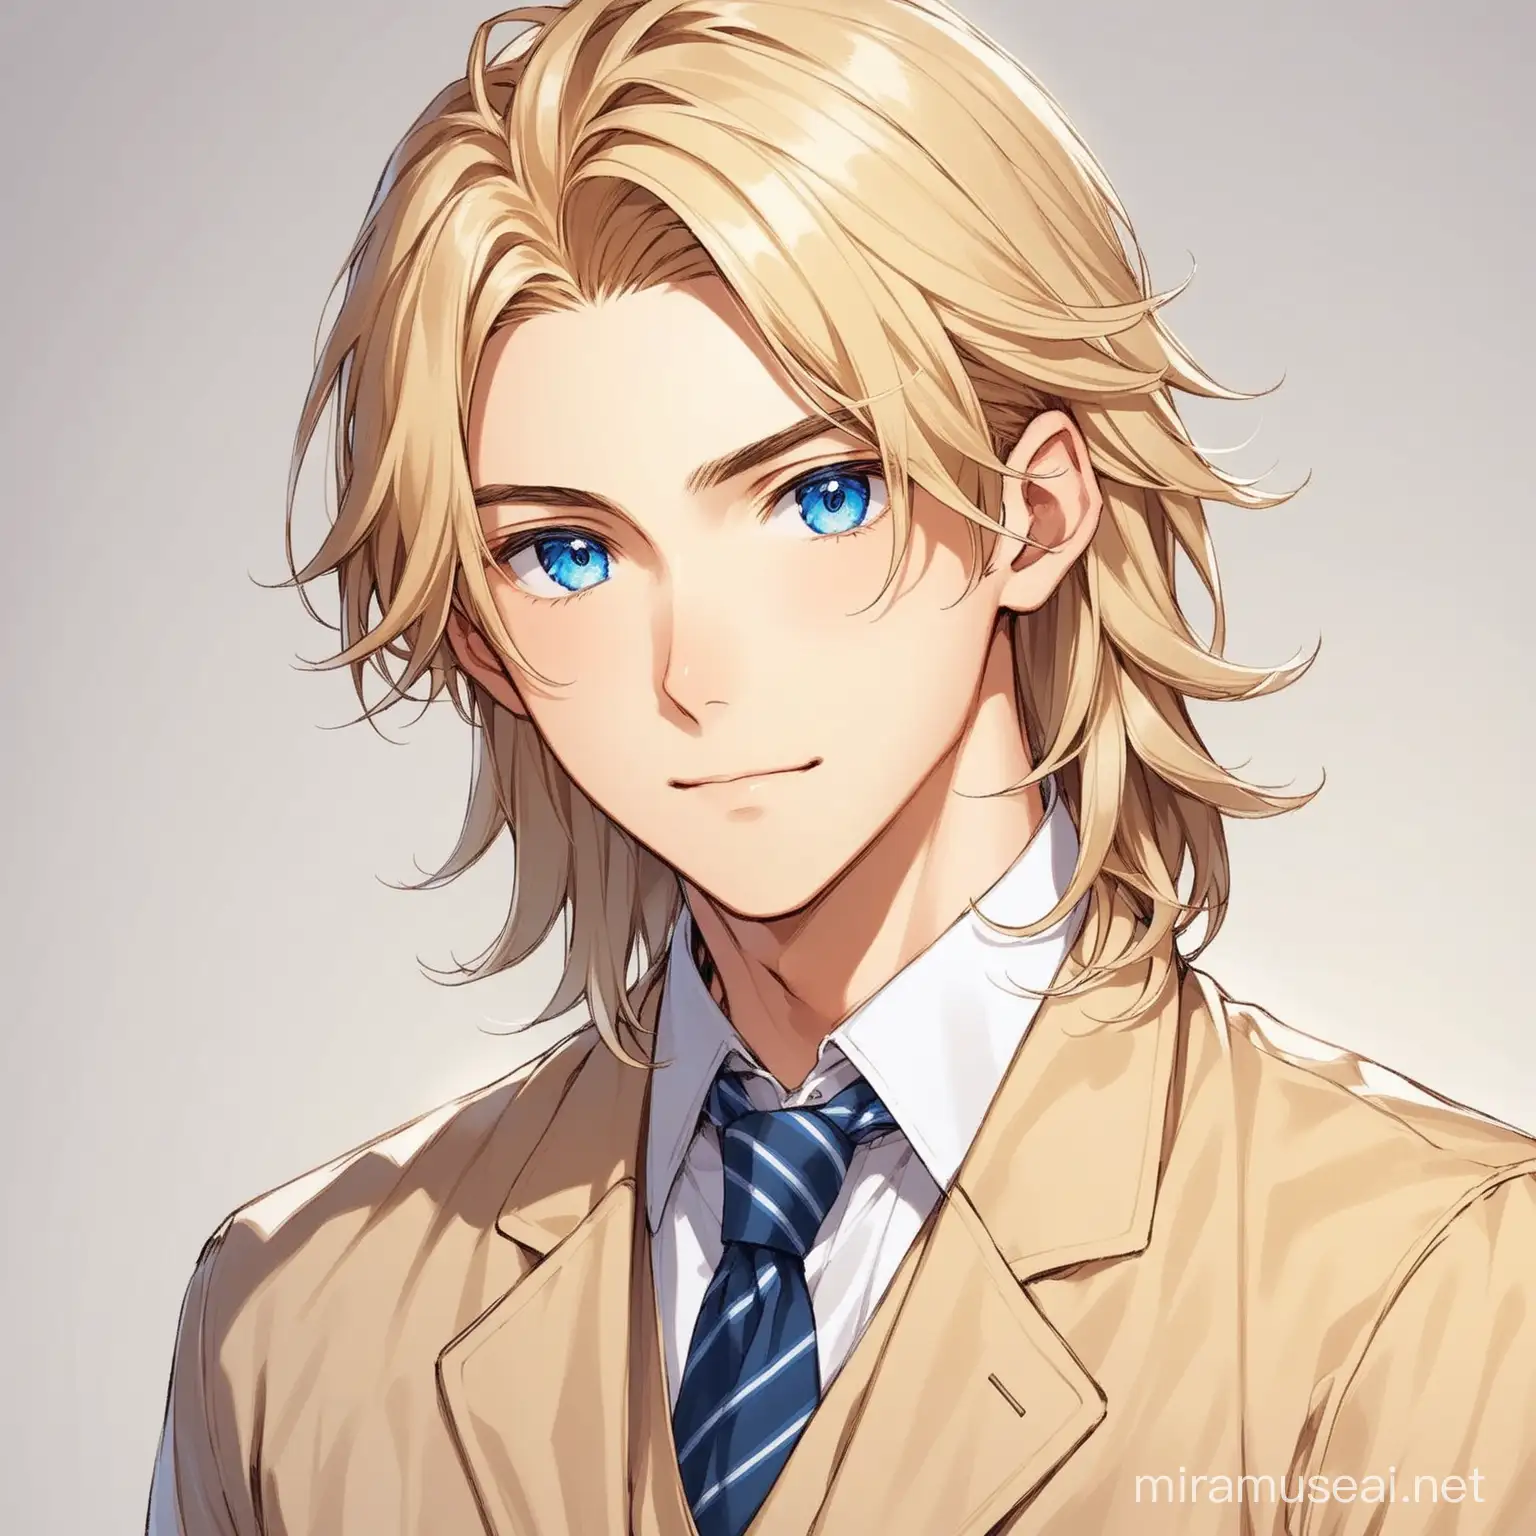 A handsome guy. He is 18 years old. He has wavy blonde hair. He has blue eyes. He wears a school uniform